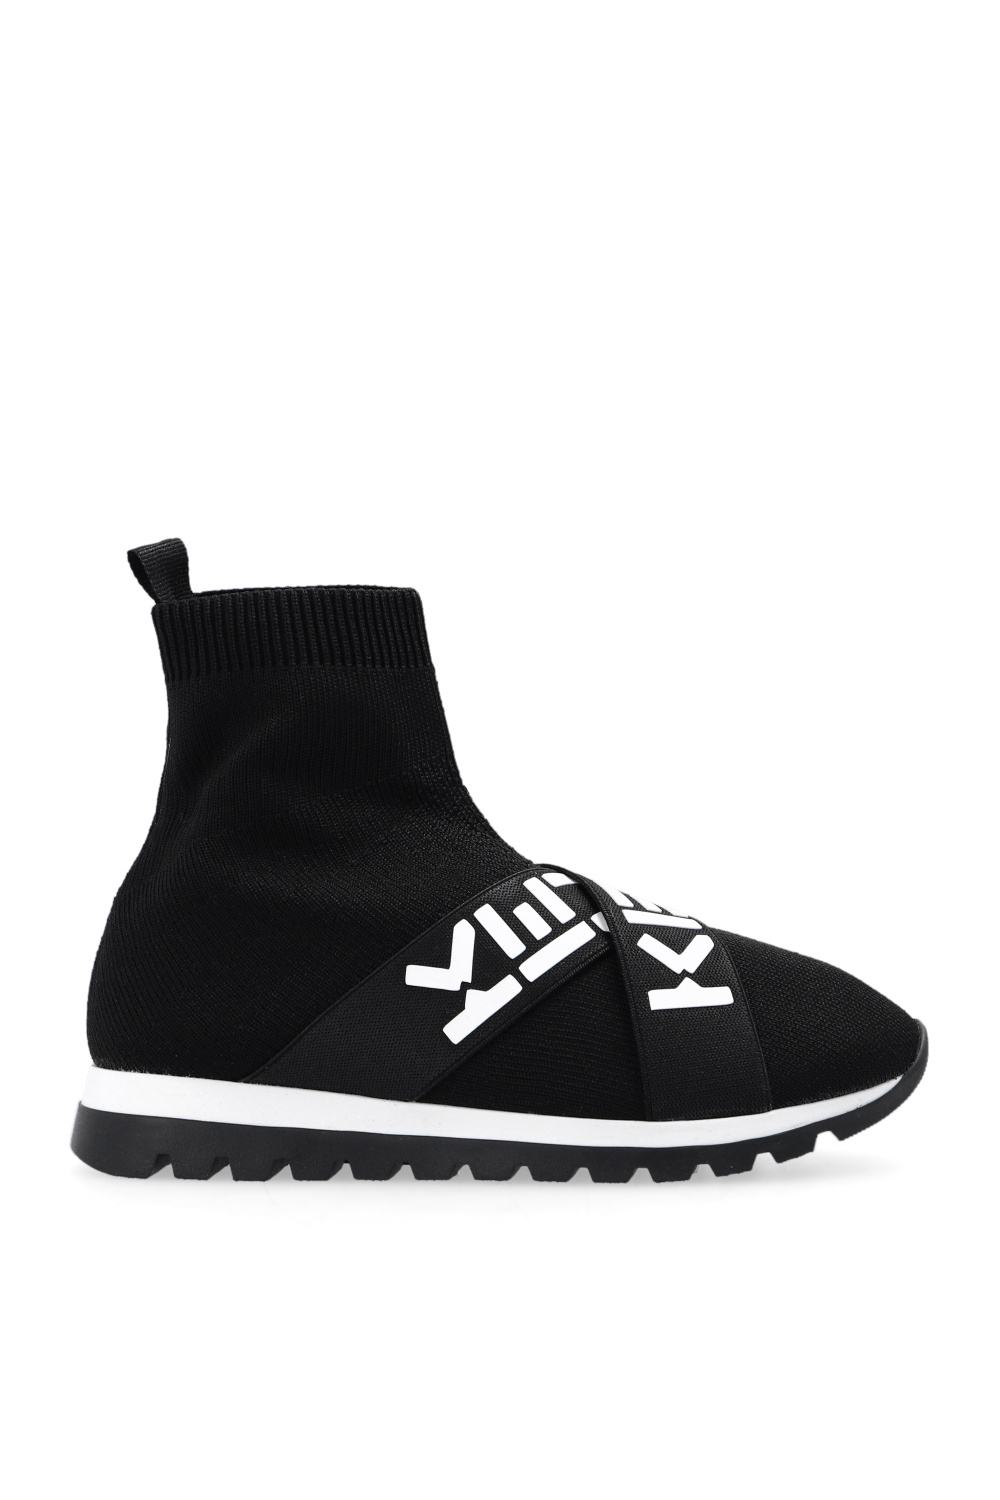 180 Kenzo Gel-Quantum Bhutan - StclaircomoShops Kids sneakers low-top - sneakers Sock